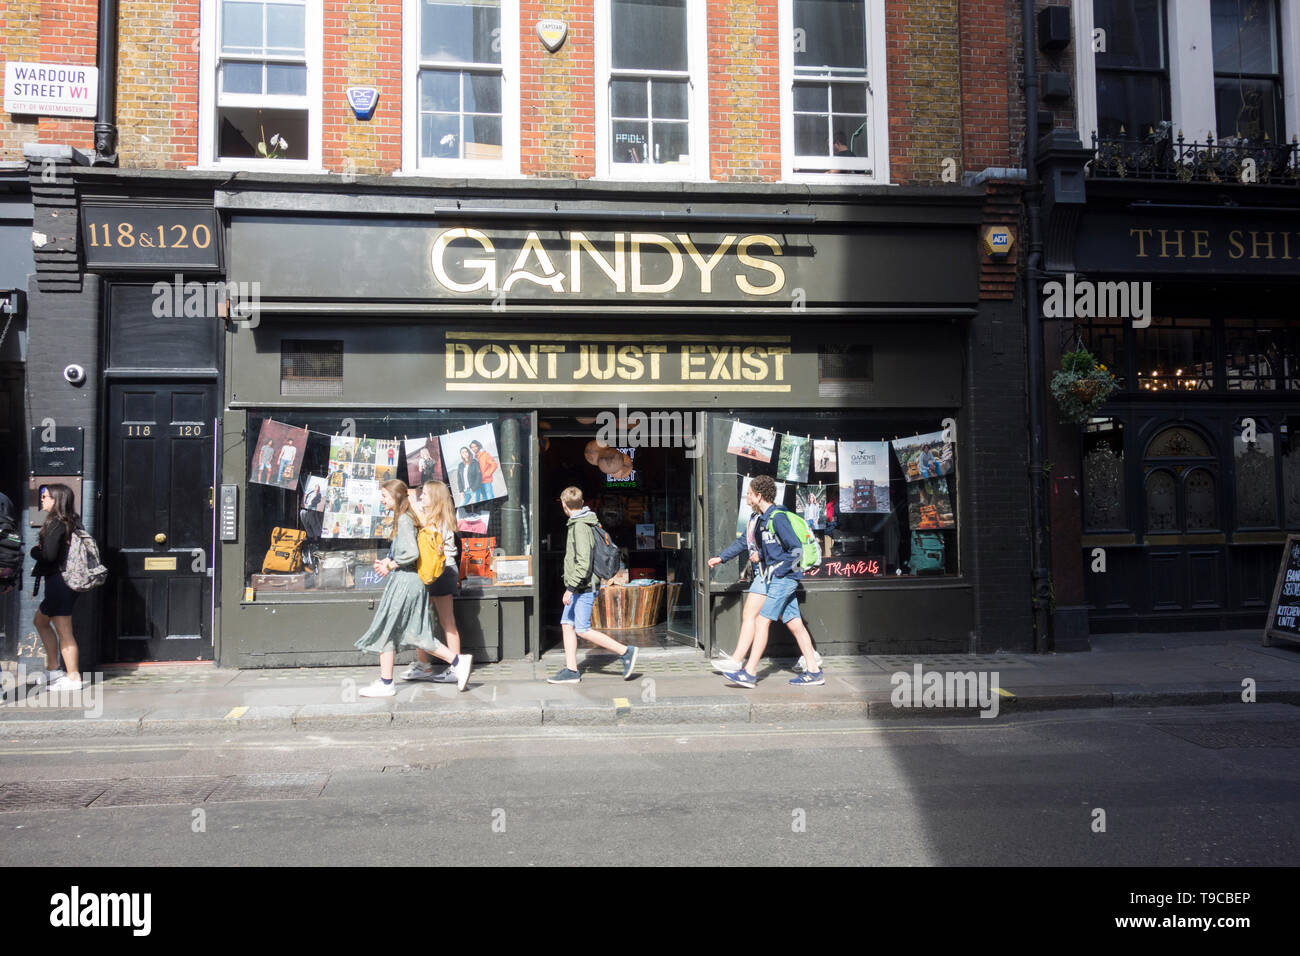 Gandy's shop front, Wardour Street, London, UK Stock Photo